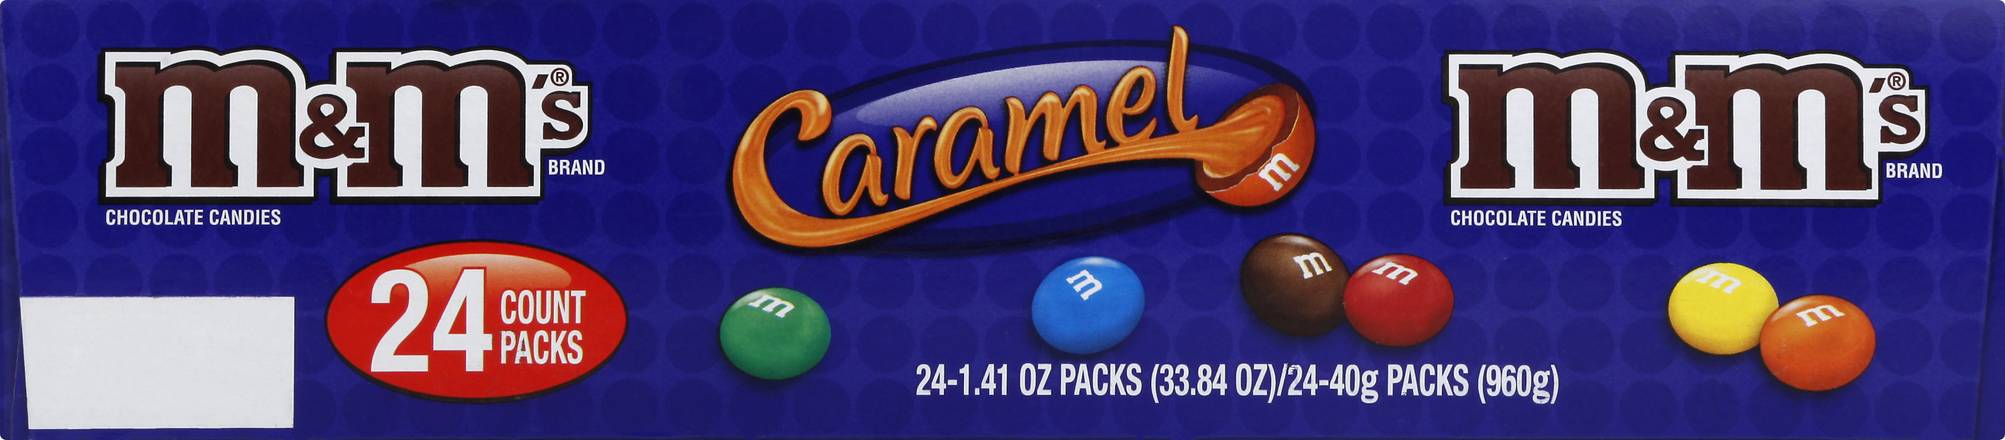 M&M's Caramel Share Size - 24ct